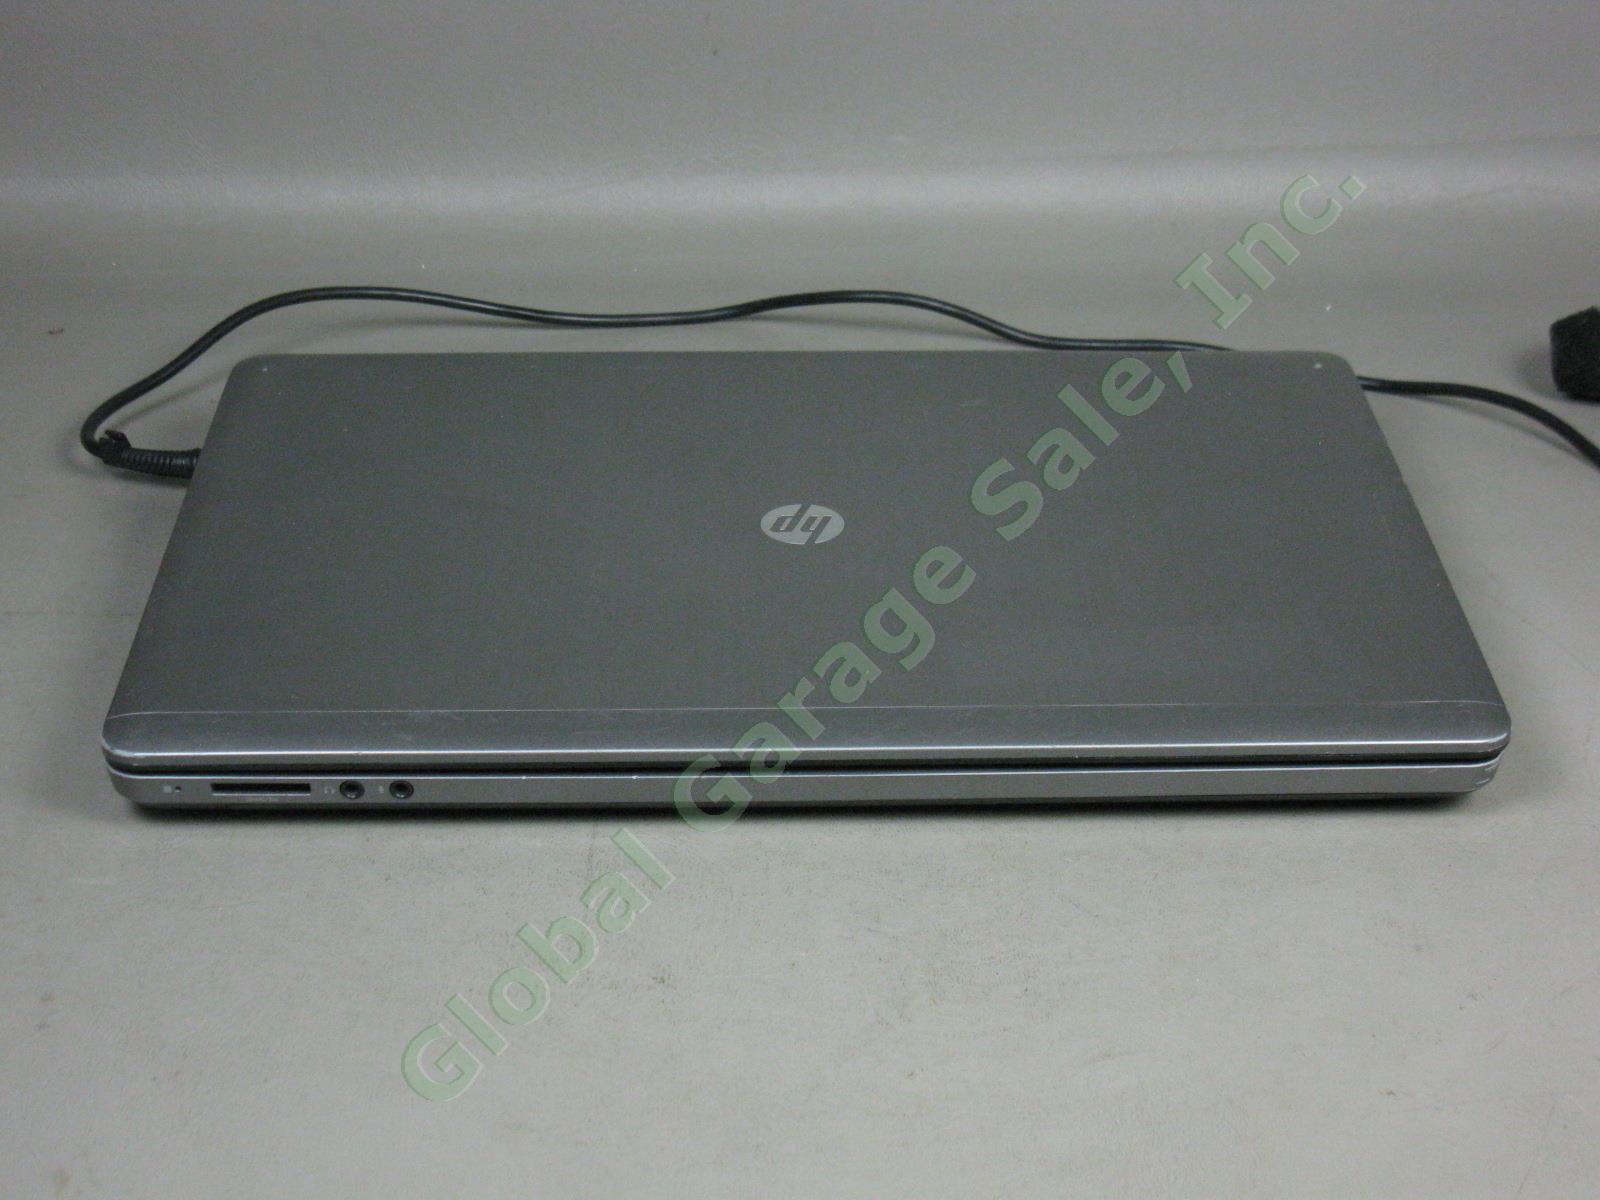 HP ProBook 4540s Laptop Computer Intel Core i3 2.40GHz 500GB 4GB RAM Win 10 Pro 3